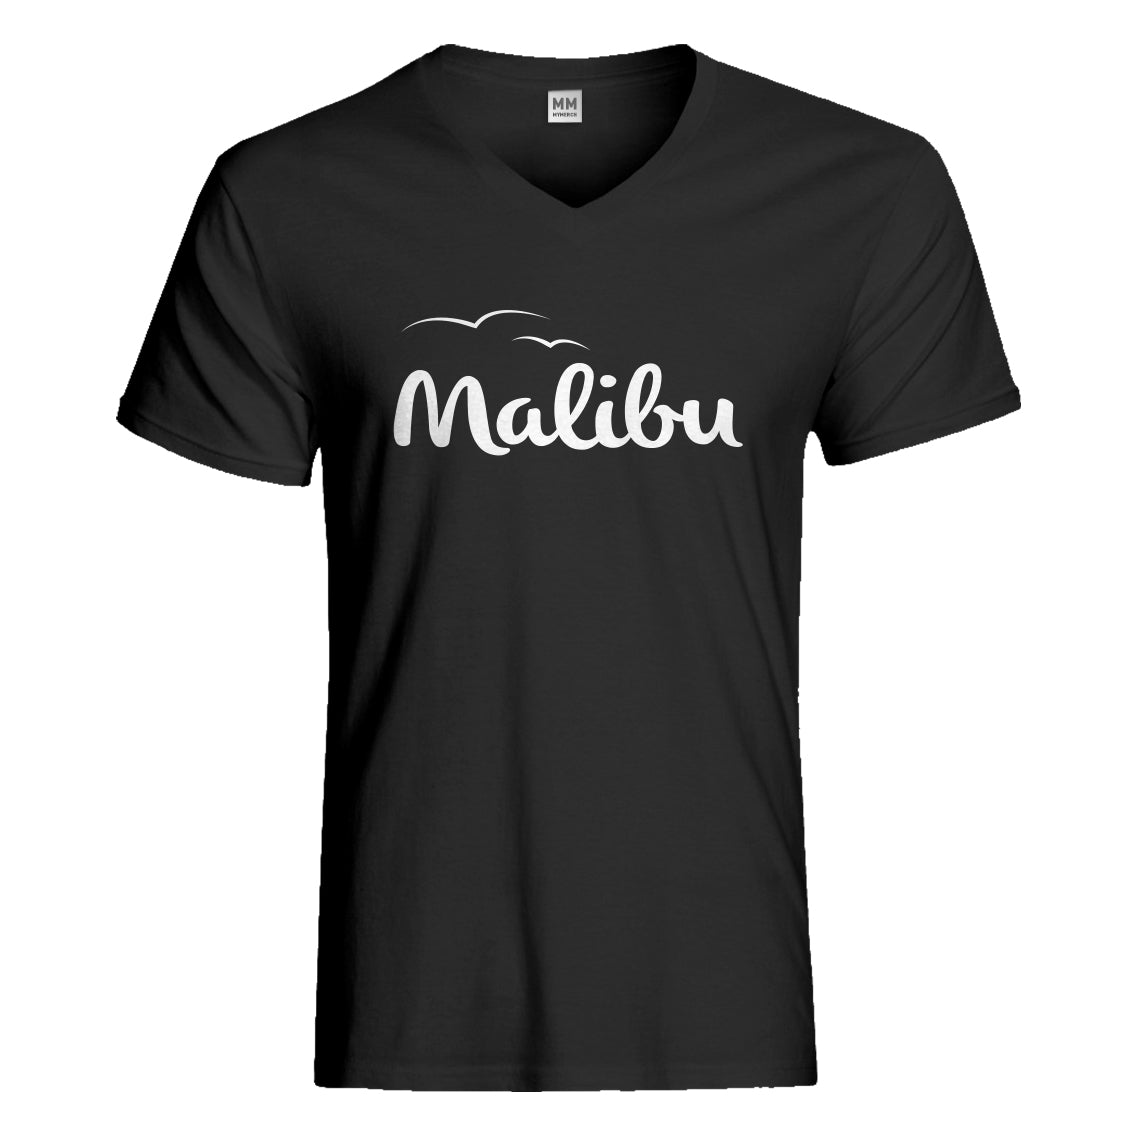 Mens Malibu Vneck T-shirt